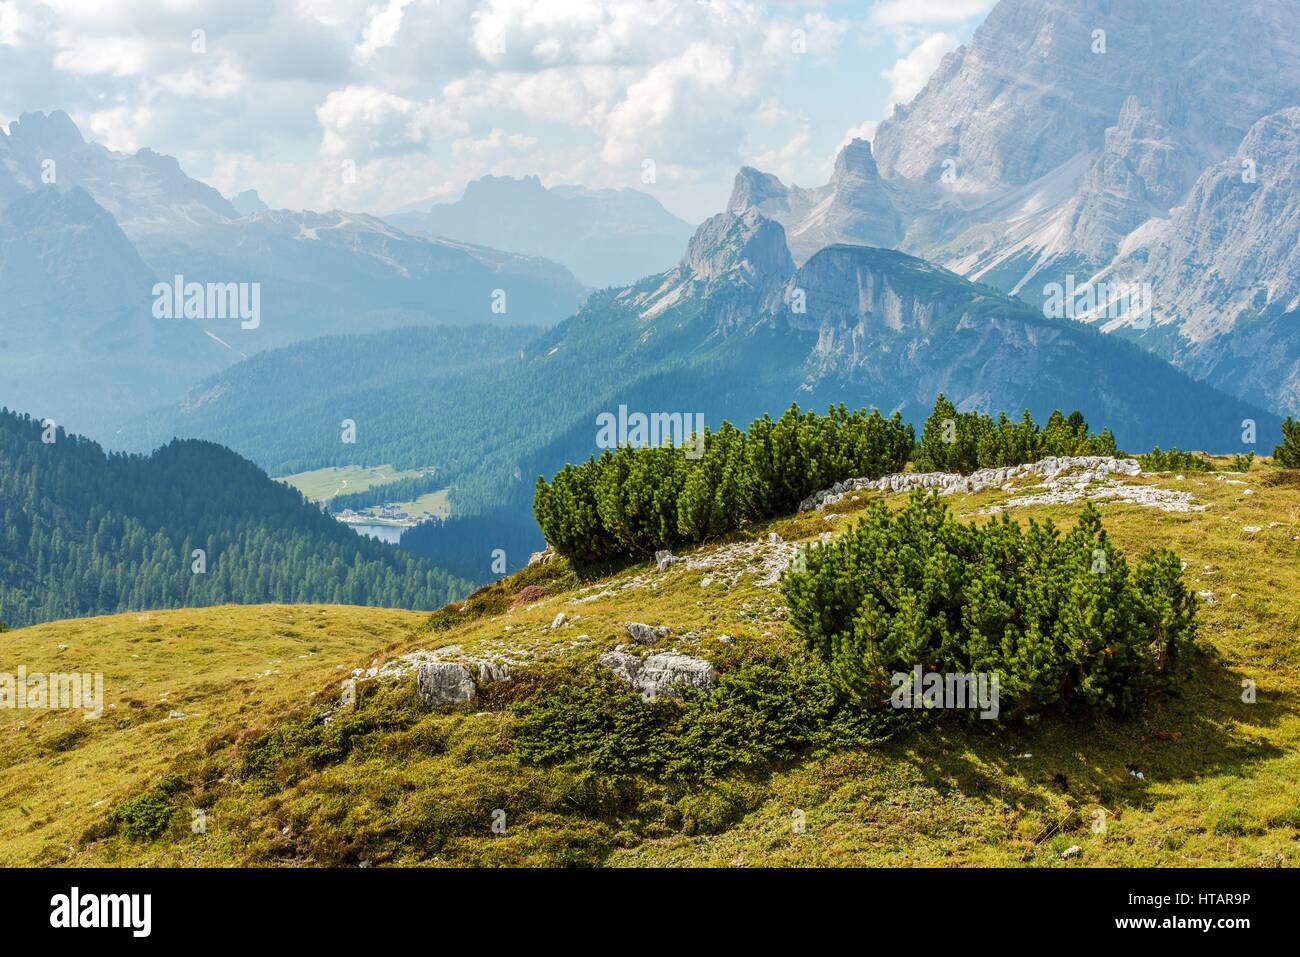 Italian Dolomites Summer Scenery. Missurina, Italy. Stock Photo